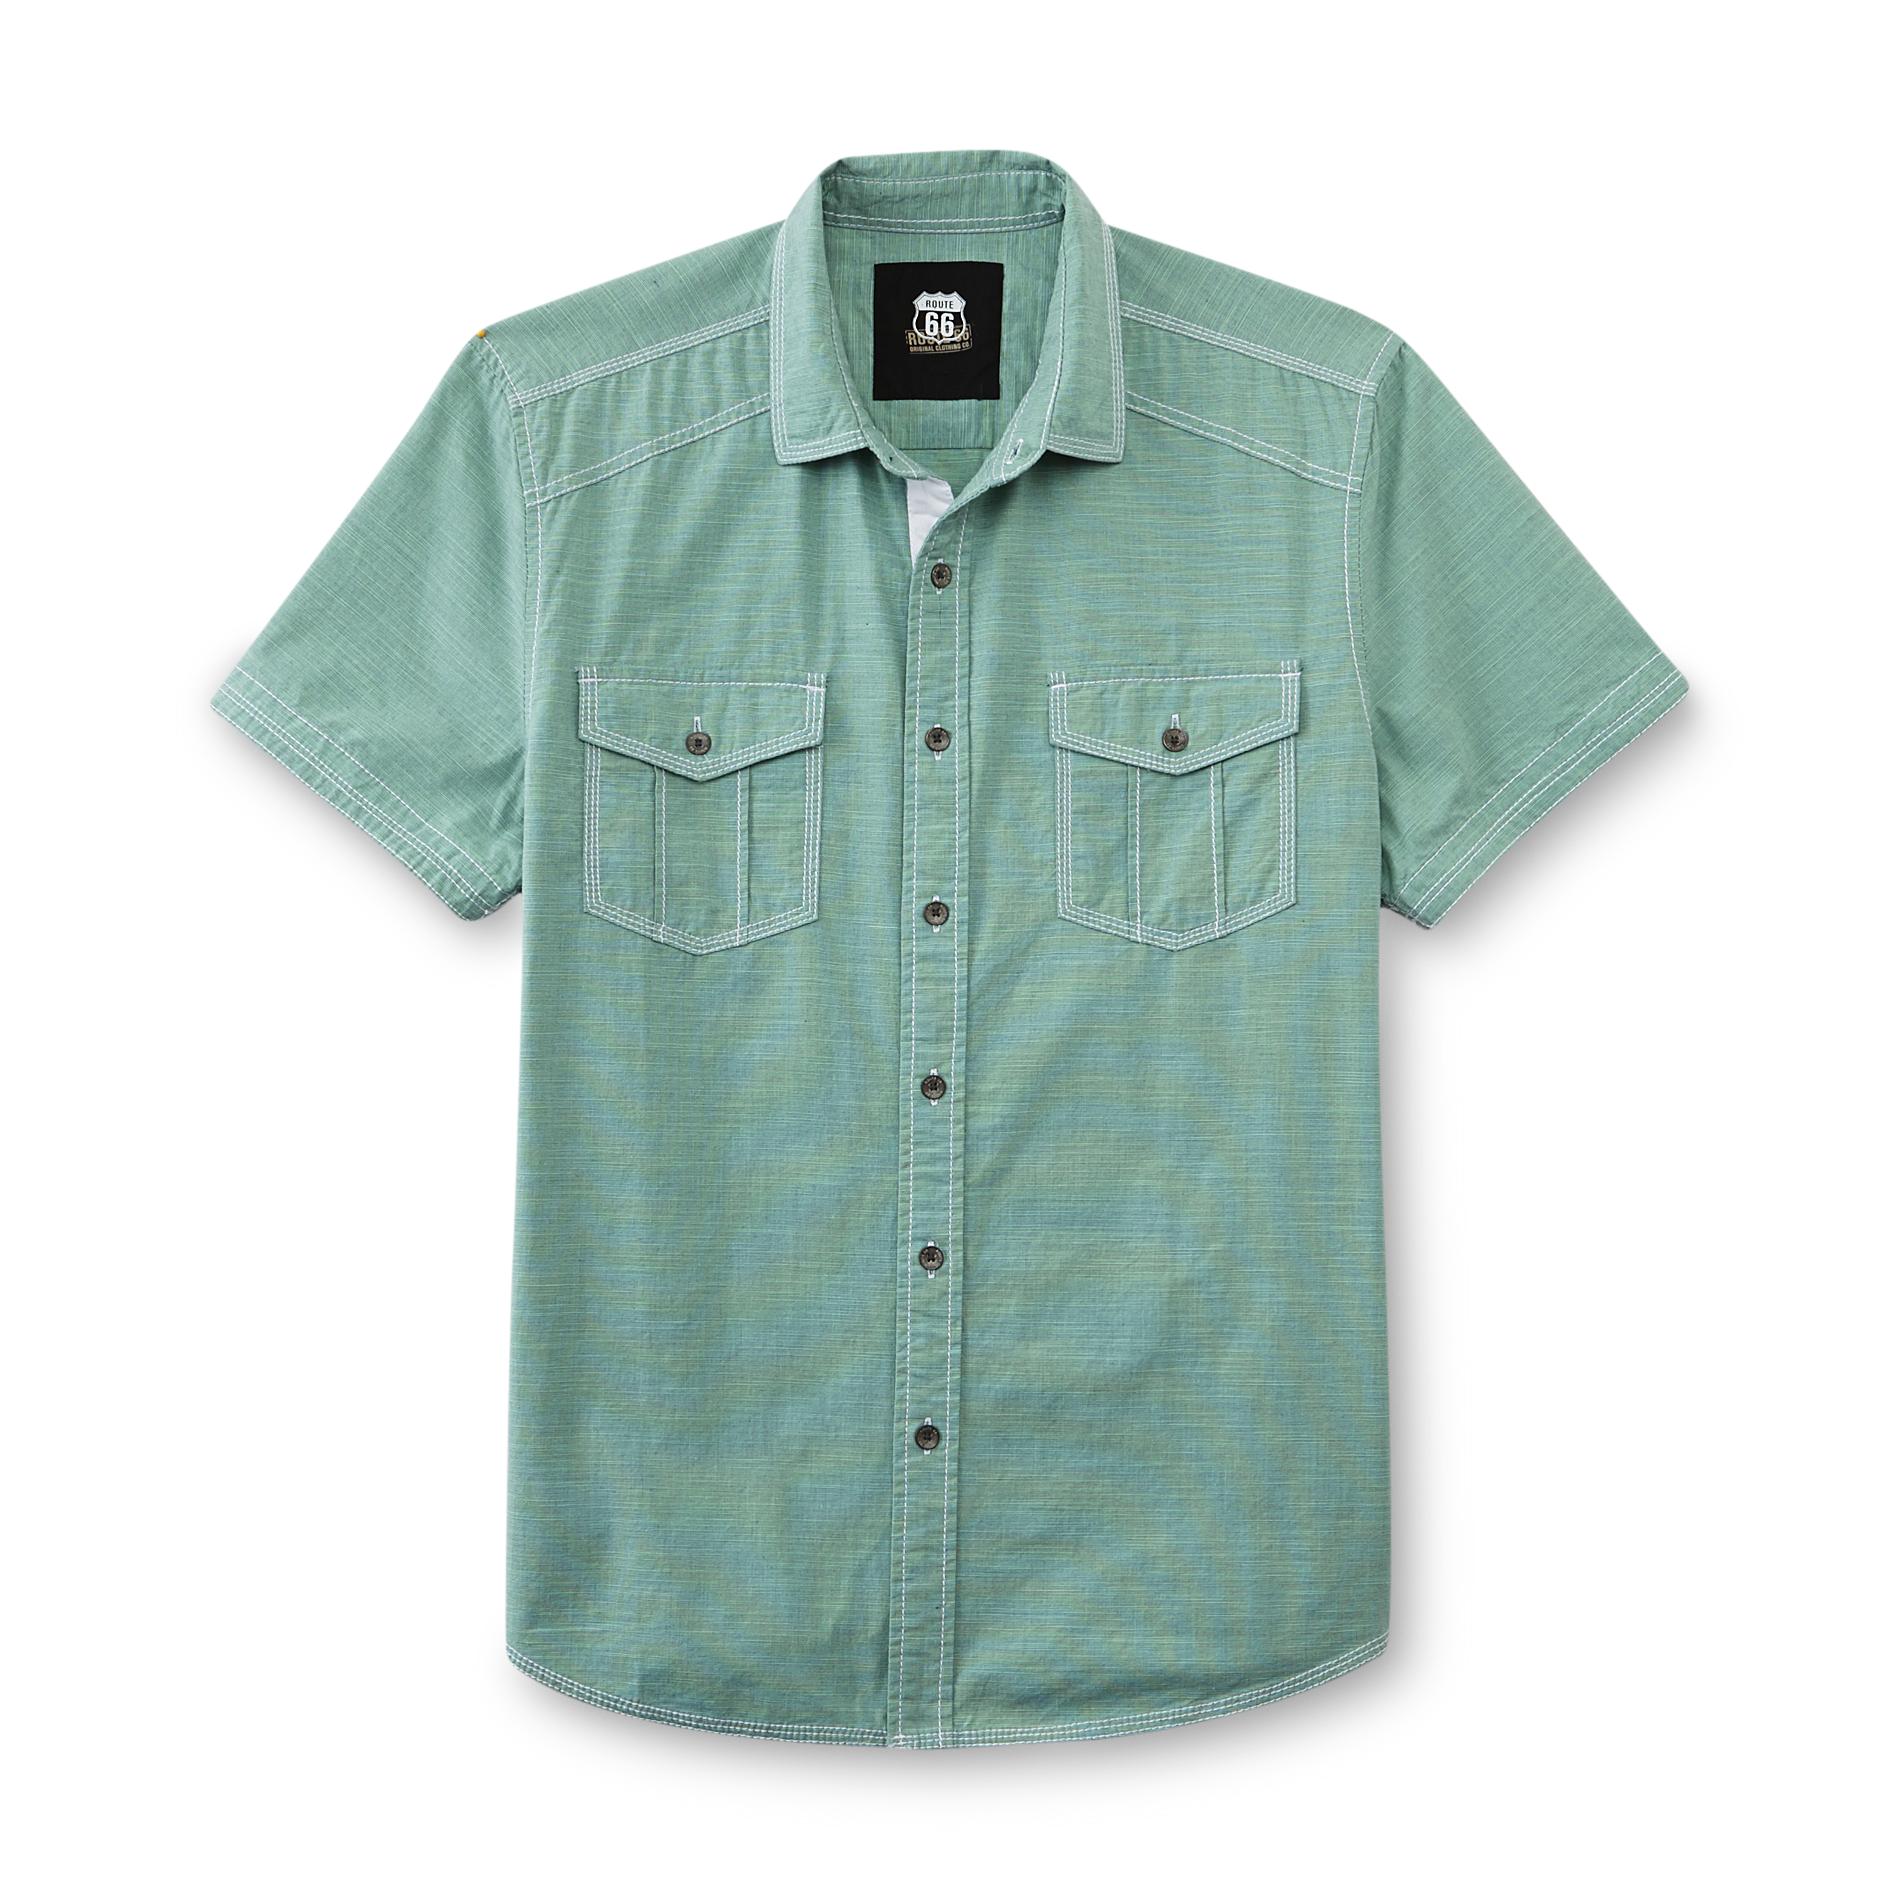 Route 66 Men's Short-Sleeve Casual Shirt